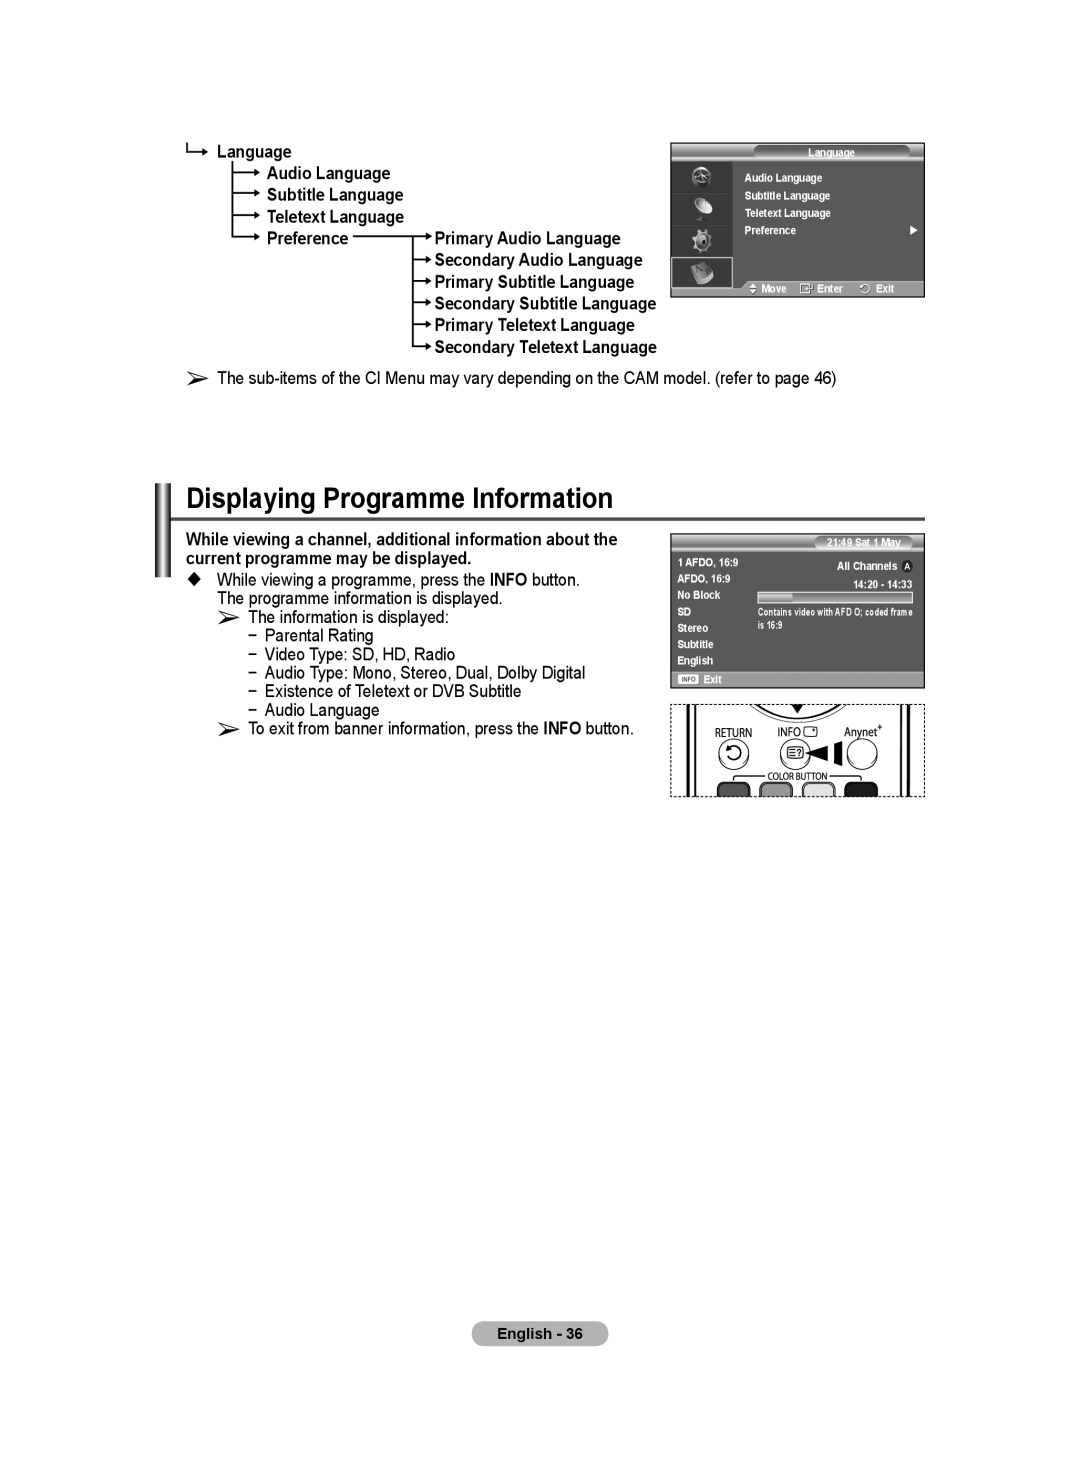 Samsung BN68-01171B-03 manual Displaying Programme Information, Teletext Language Preference, Primary Subtitle Language 